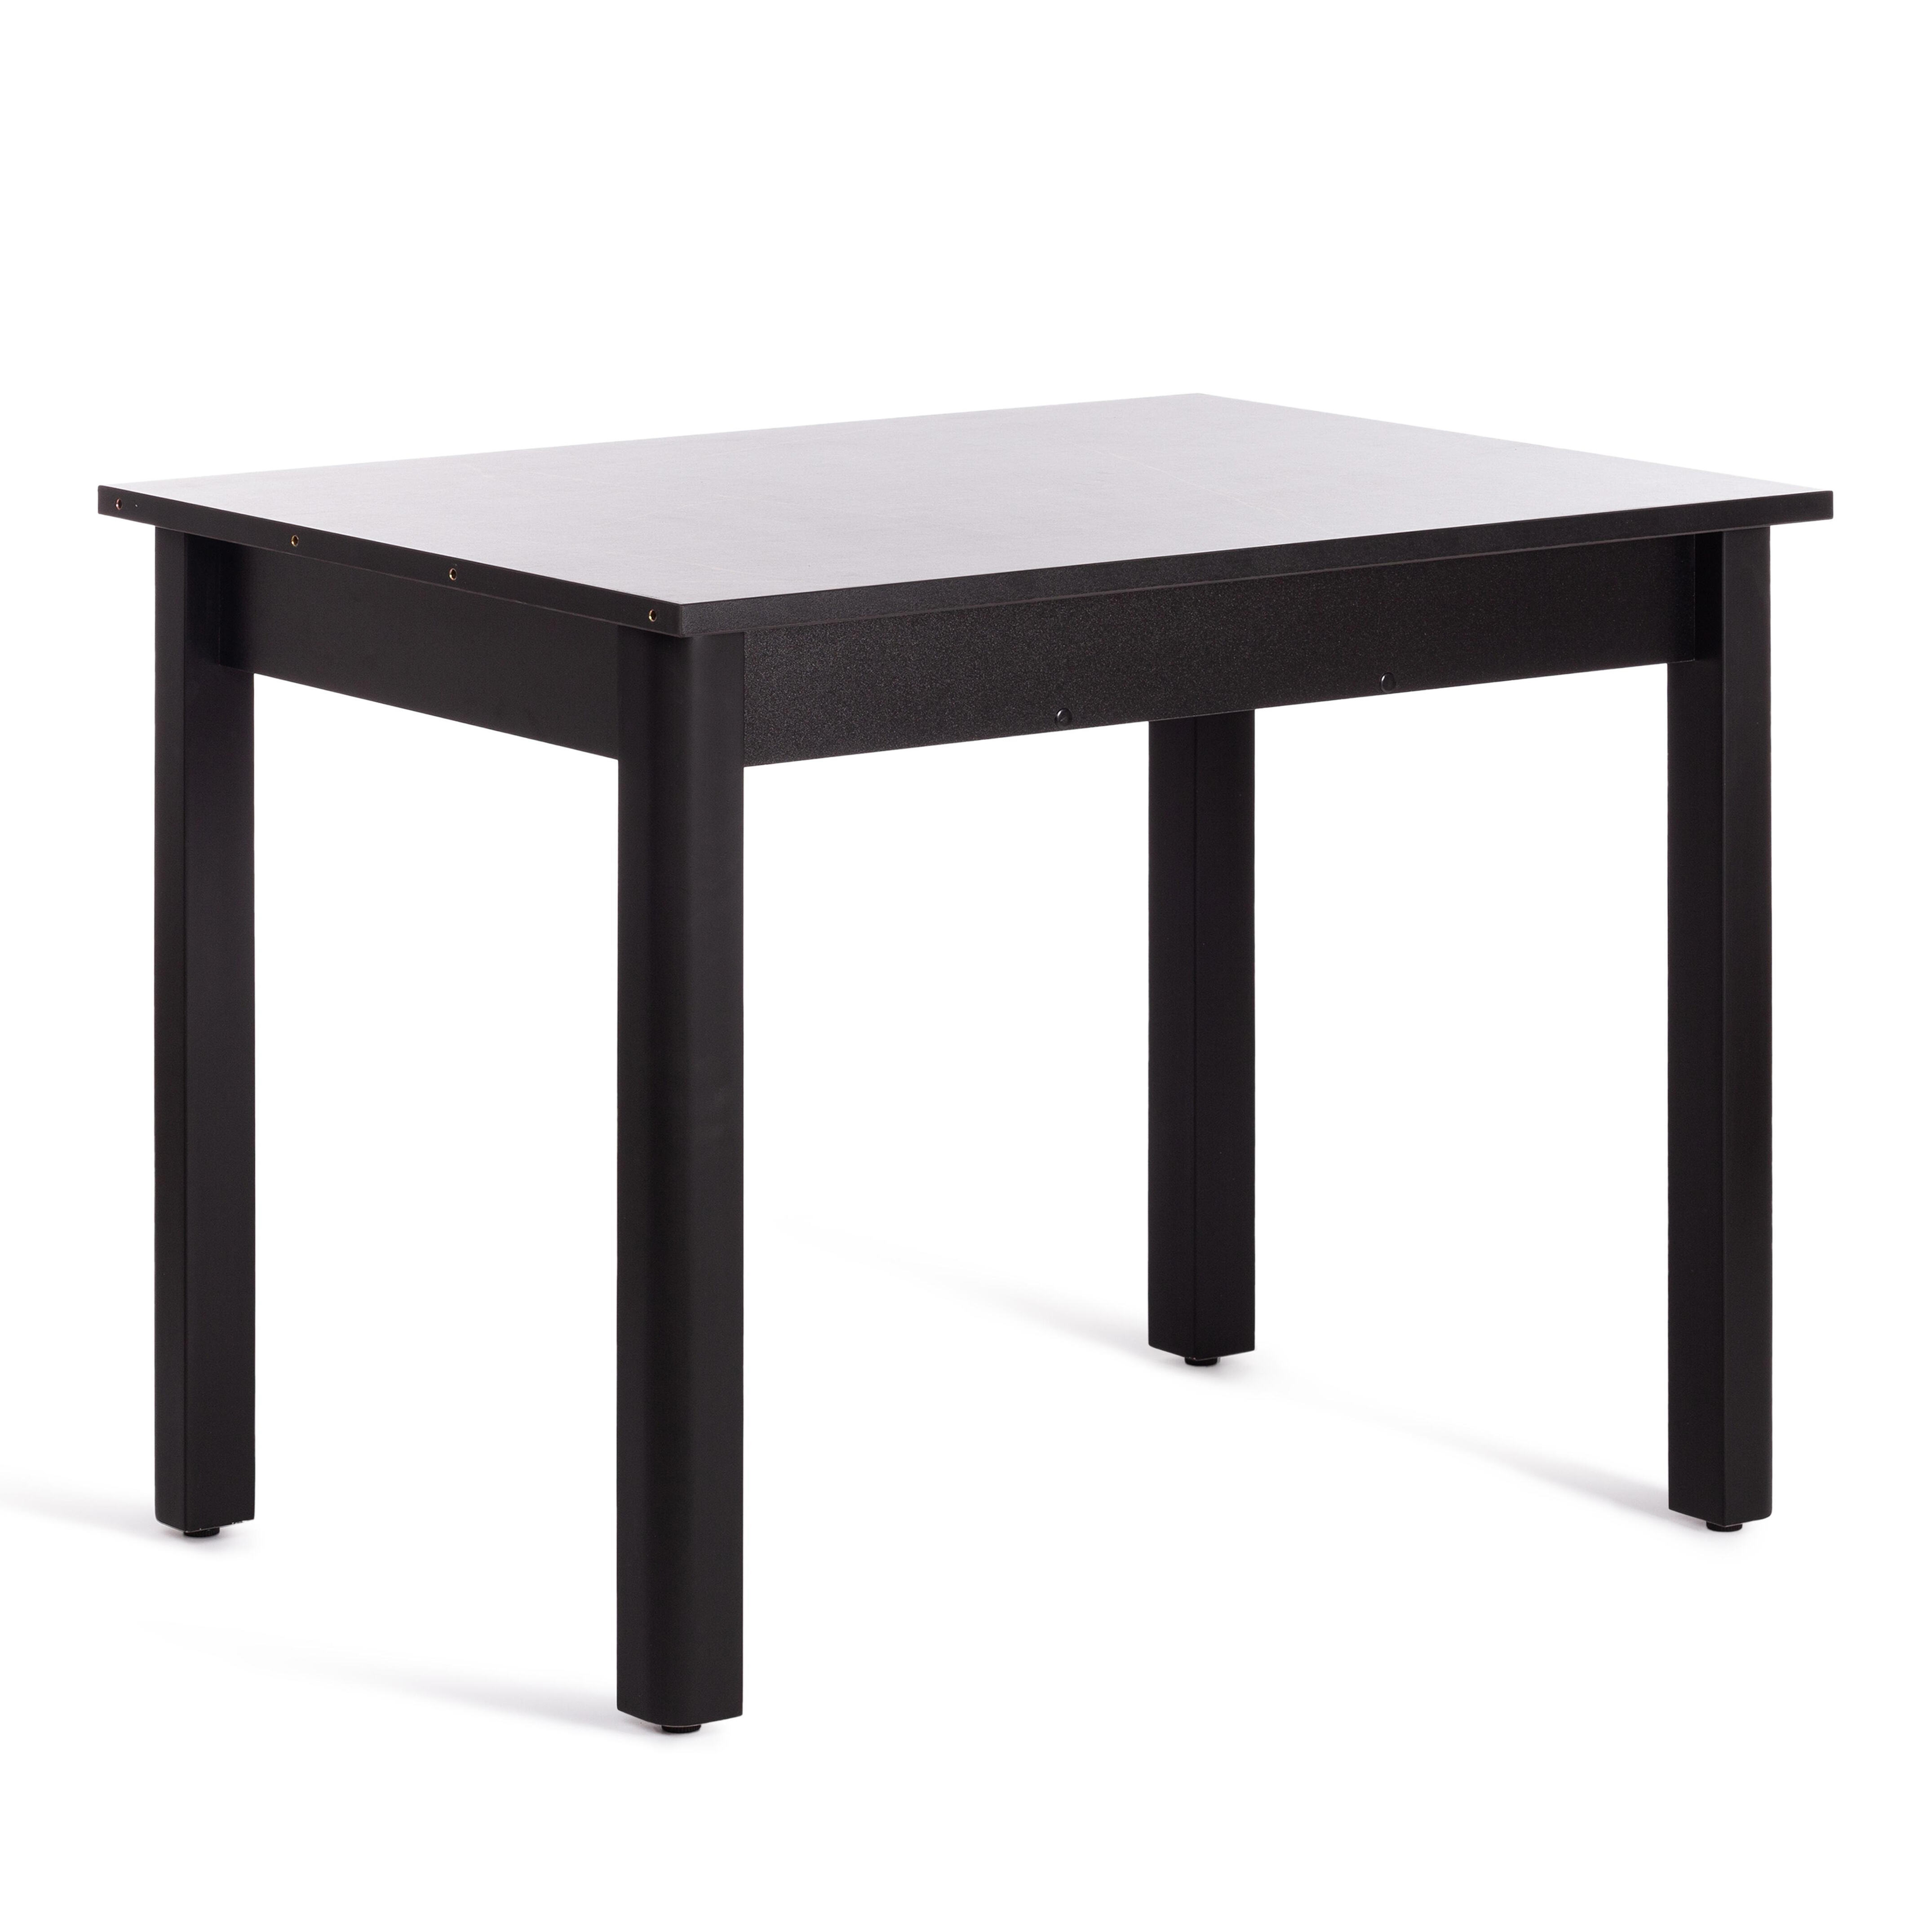 91000031 Кухонный стол прямоугольный 19734 100-140x70x75 см ЛДСП цвет белый/черный мрамор MODERN STLM-0432791 TETCHAIR